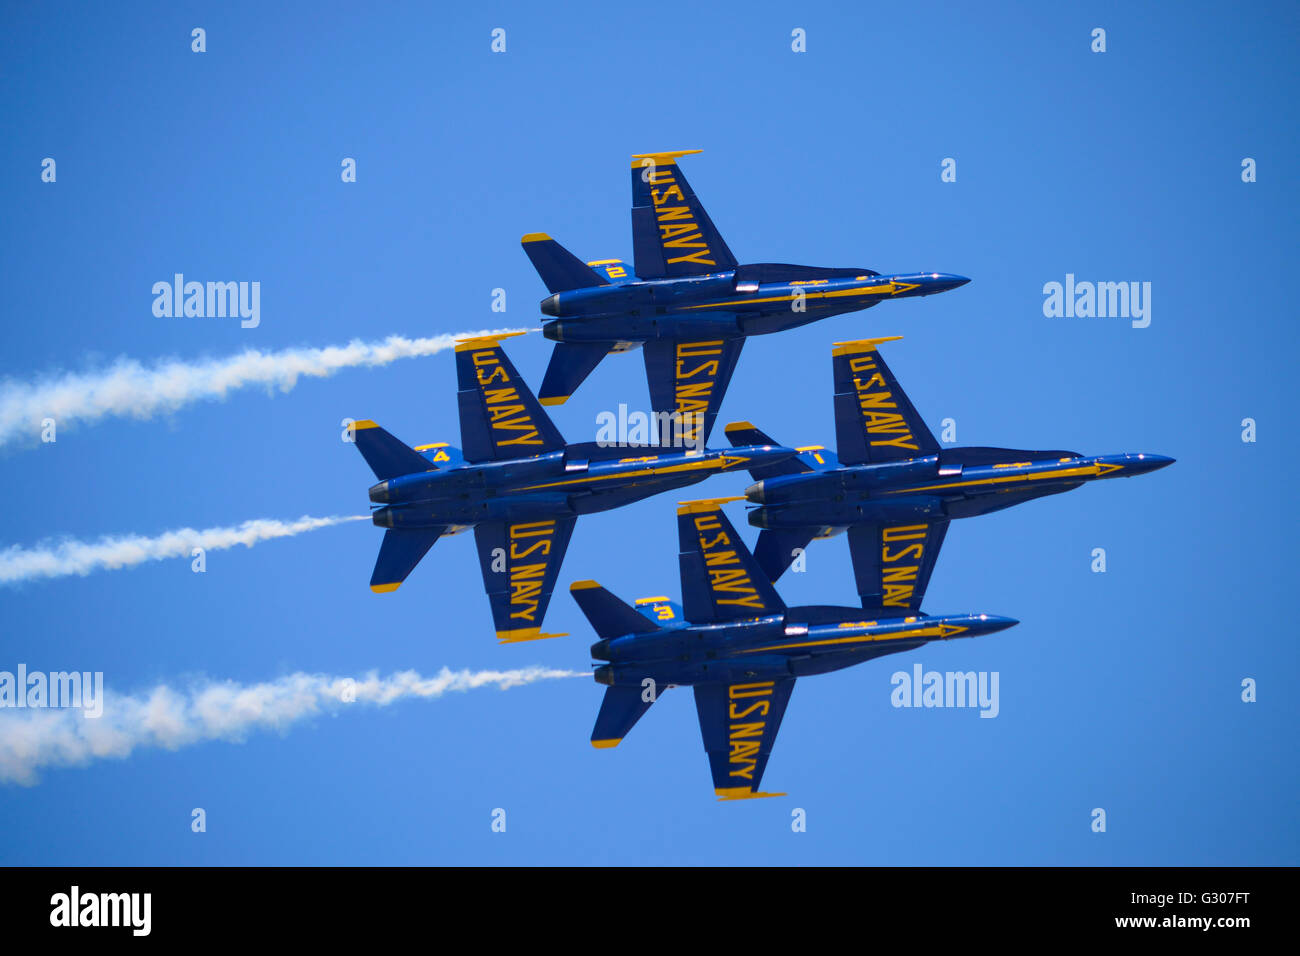 US Navy Blue Angels fliegen f-18 Hornet Jet-Flugzeuge während Jones Beach Airshow. Stockfoto